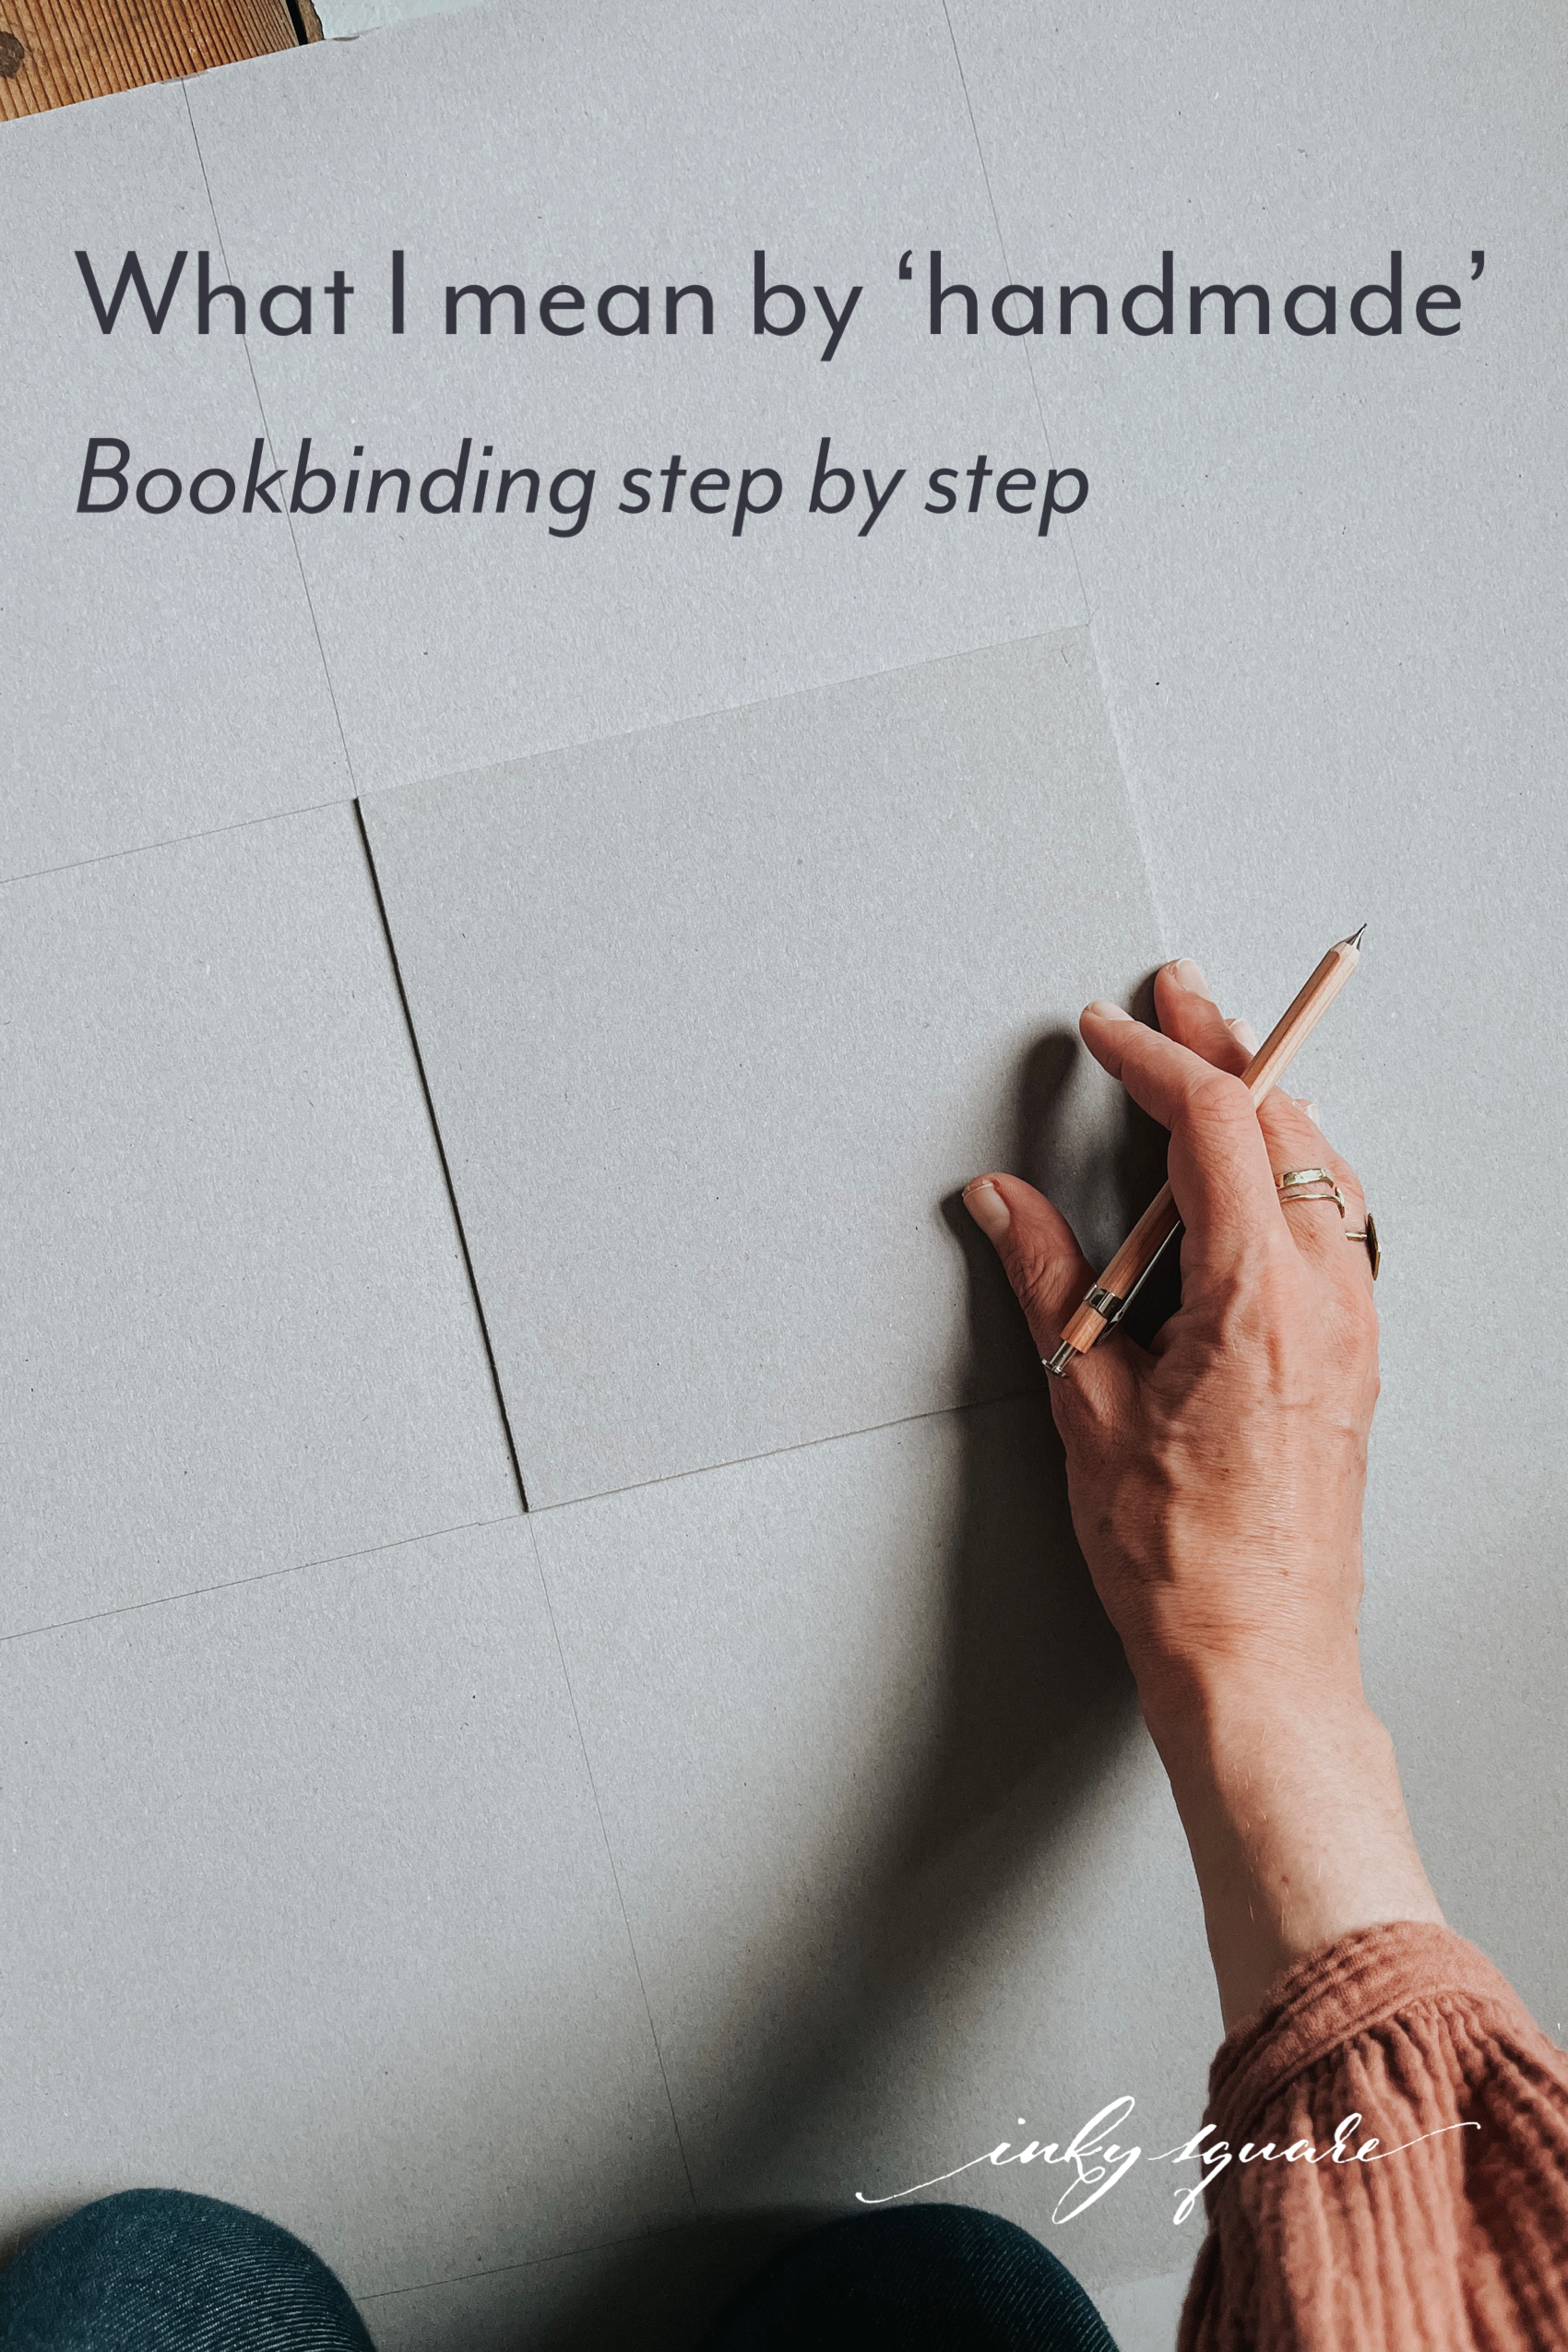 Bookbinding: Hand-Stitching Workshop